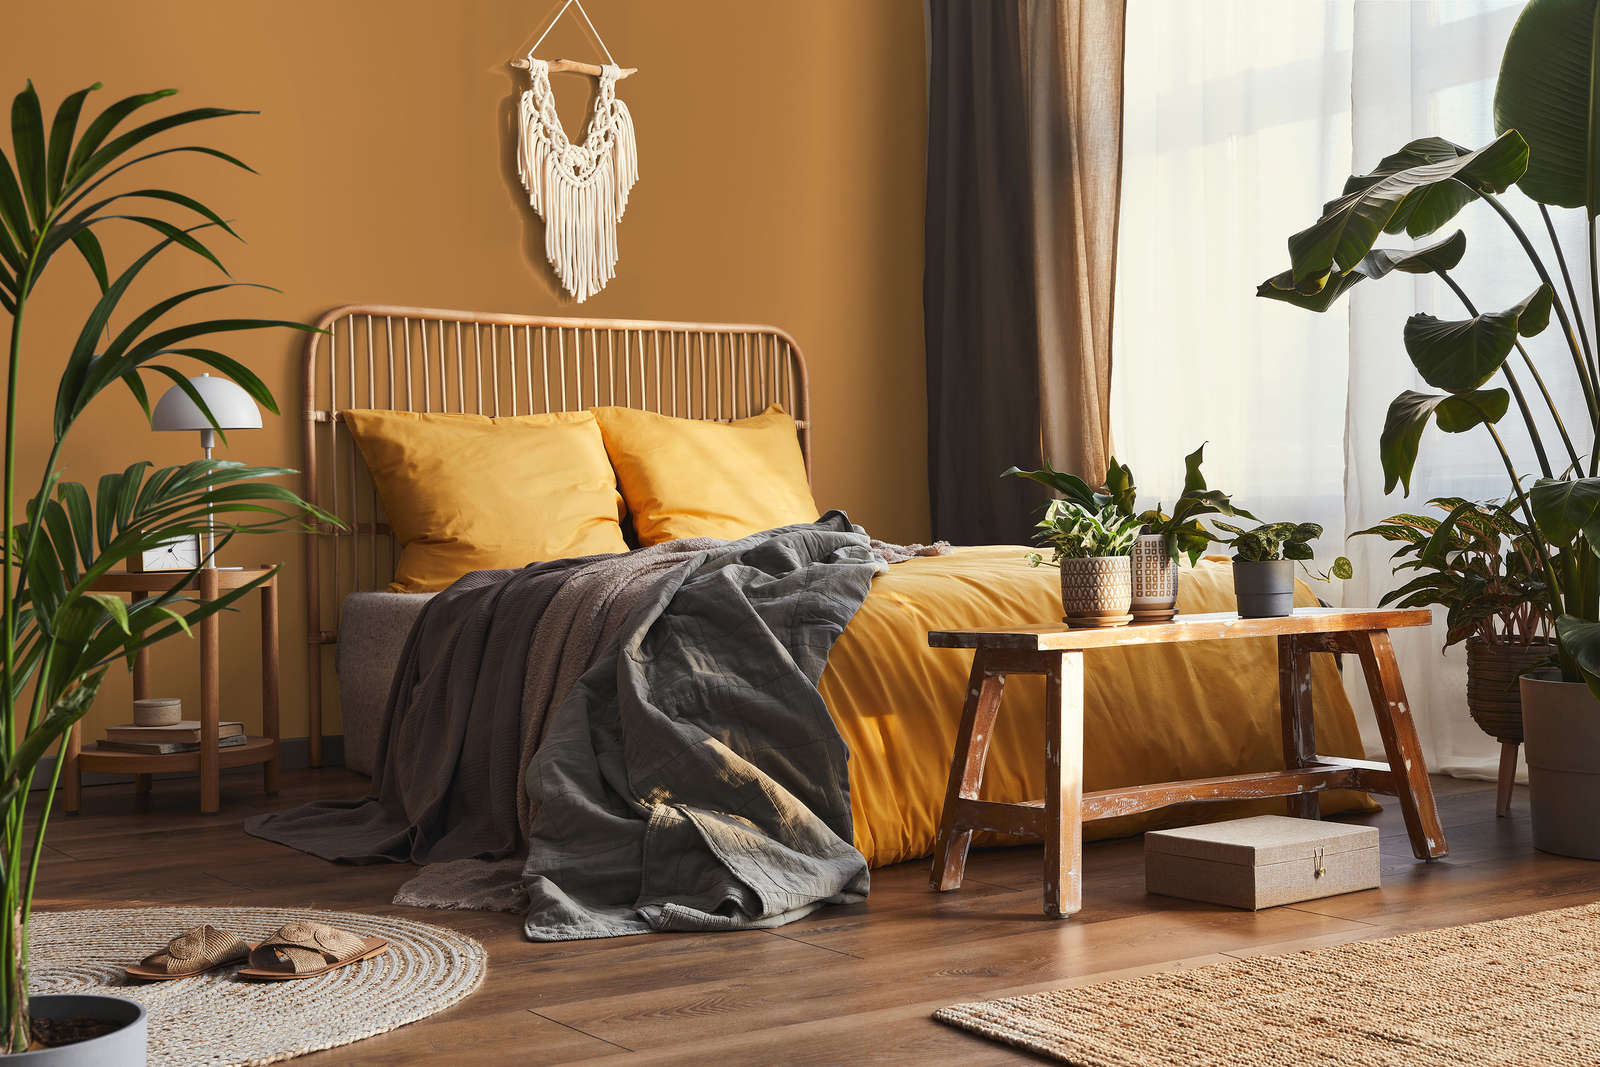             Premium Wall Paint strong light brown »Beige Orange/Sassy Saffron« NW814 – 2.5 litre
        